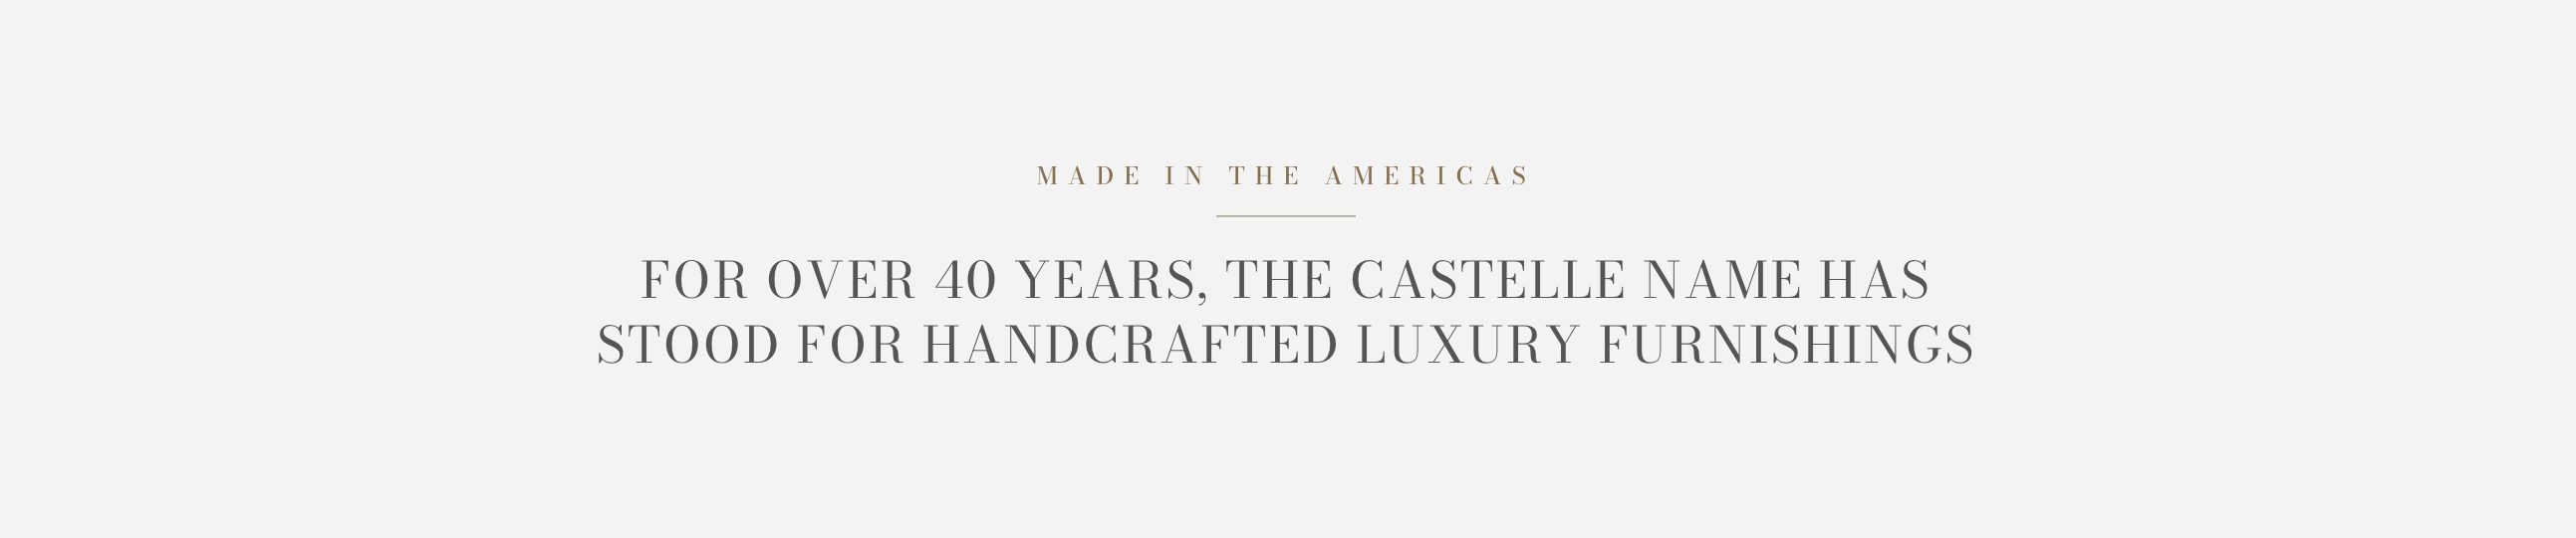 Castelle luxury furniture advertising branding and marketing agency